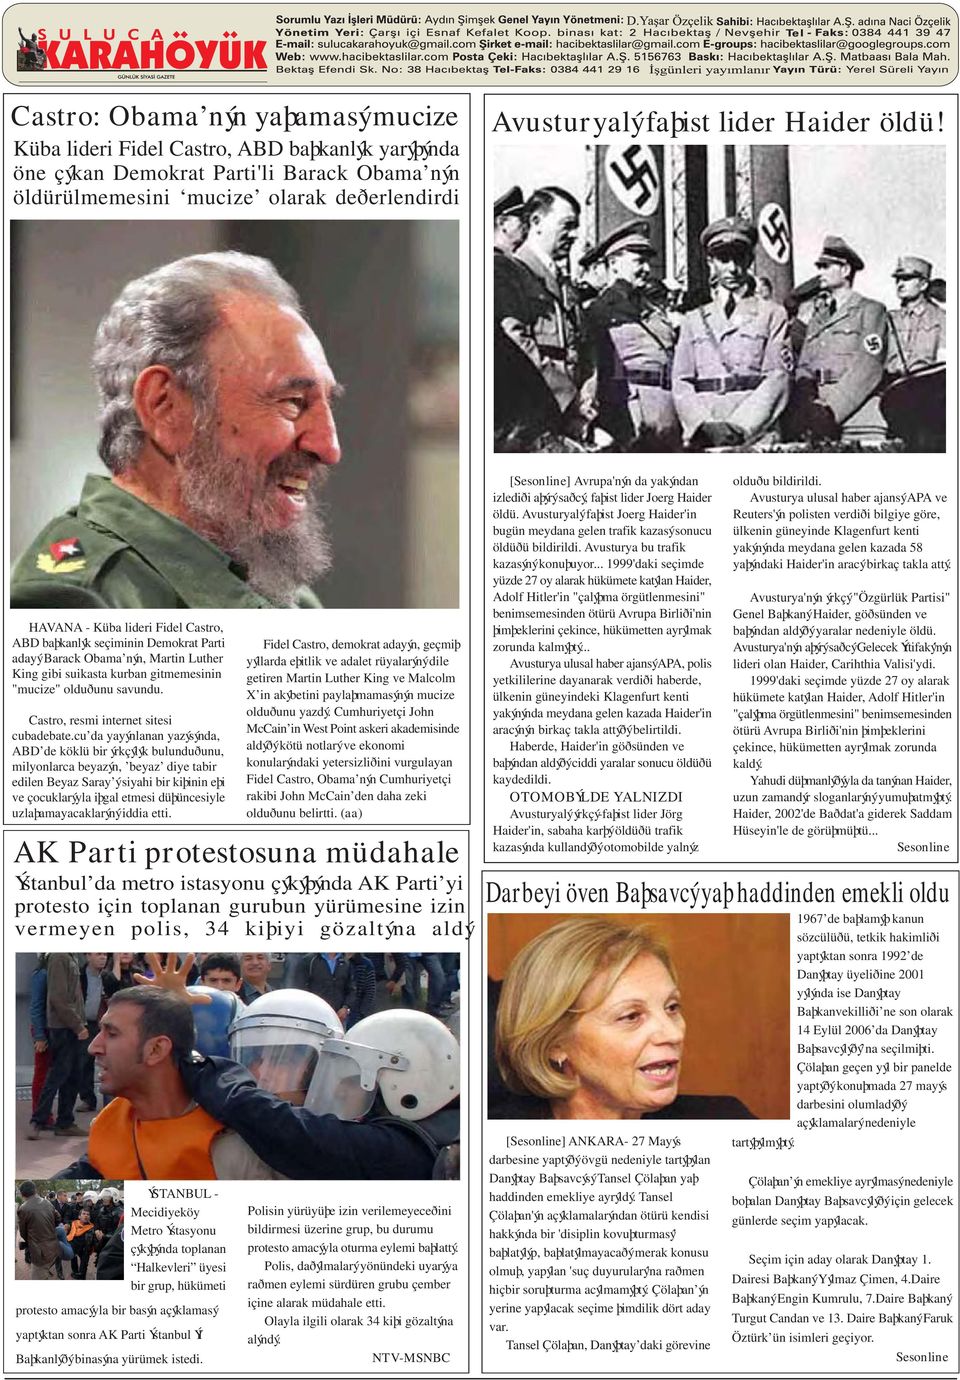 Castro, resmi internet sitesi cubadebate.